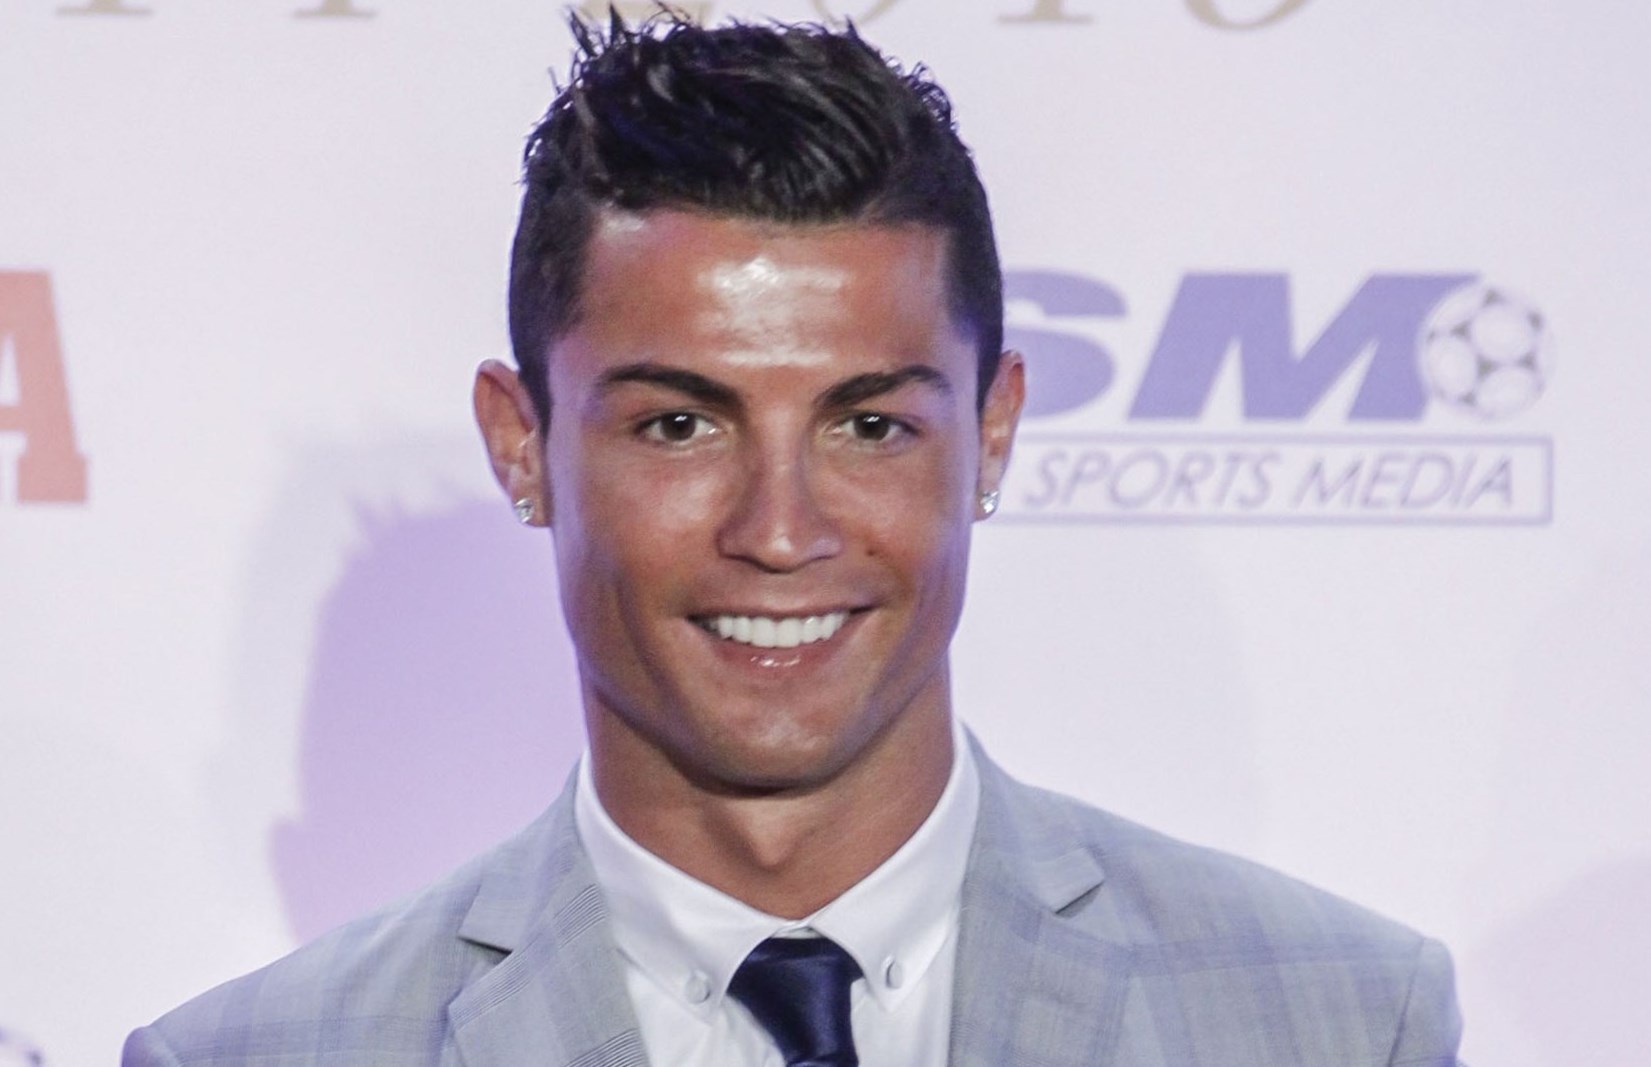 Cristiano Ronaldo - Height, Weight, Age